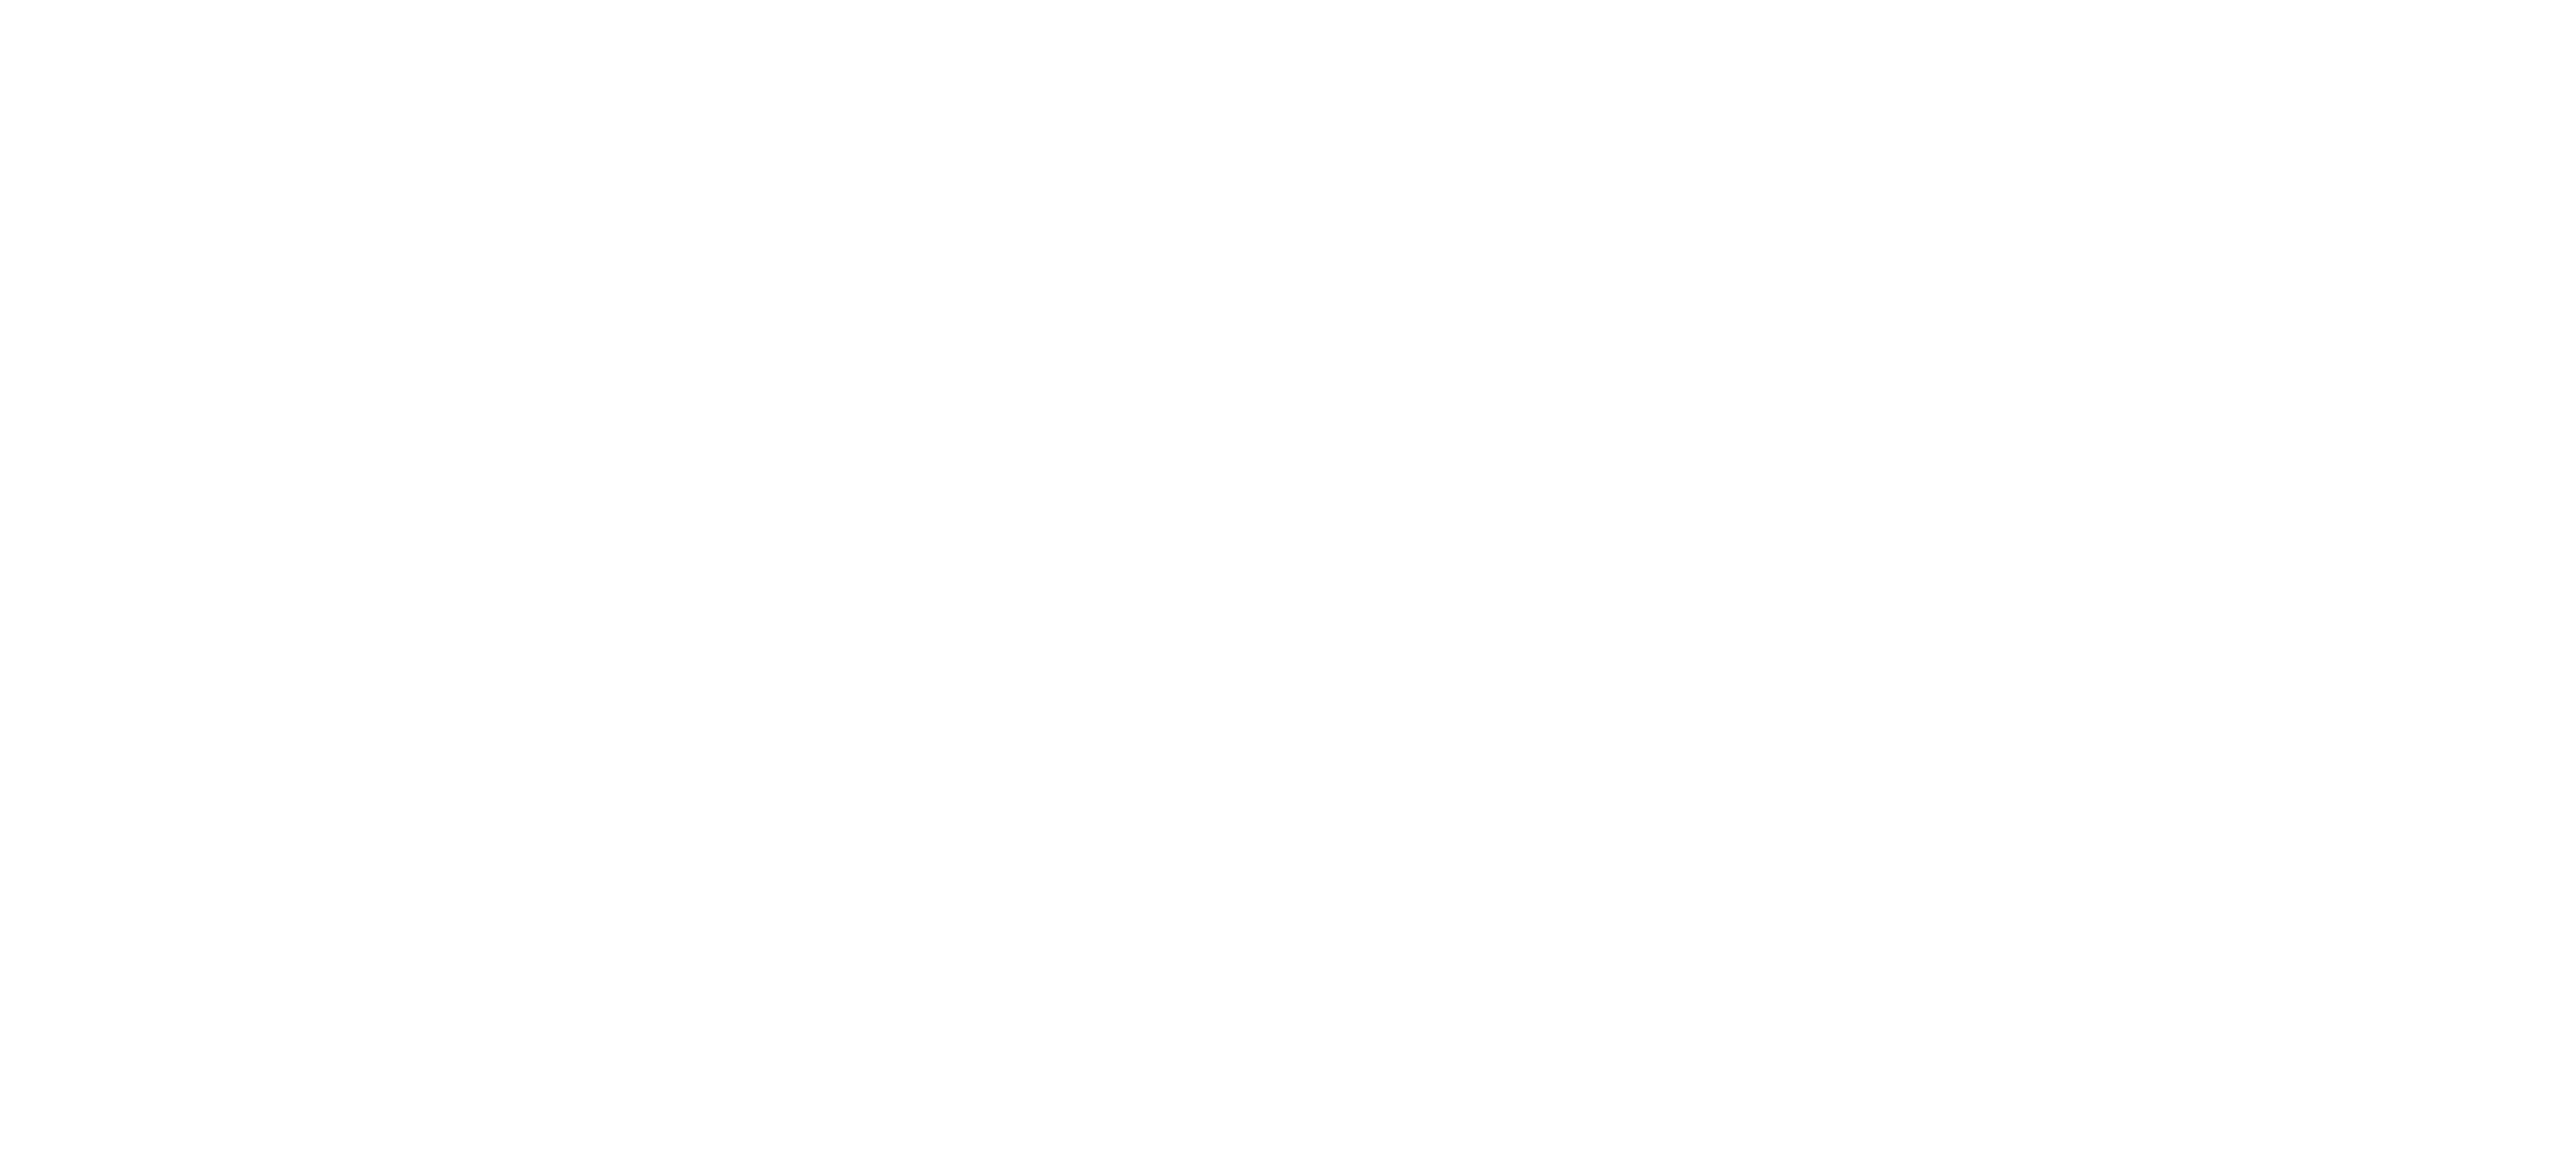 Scratch Radio